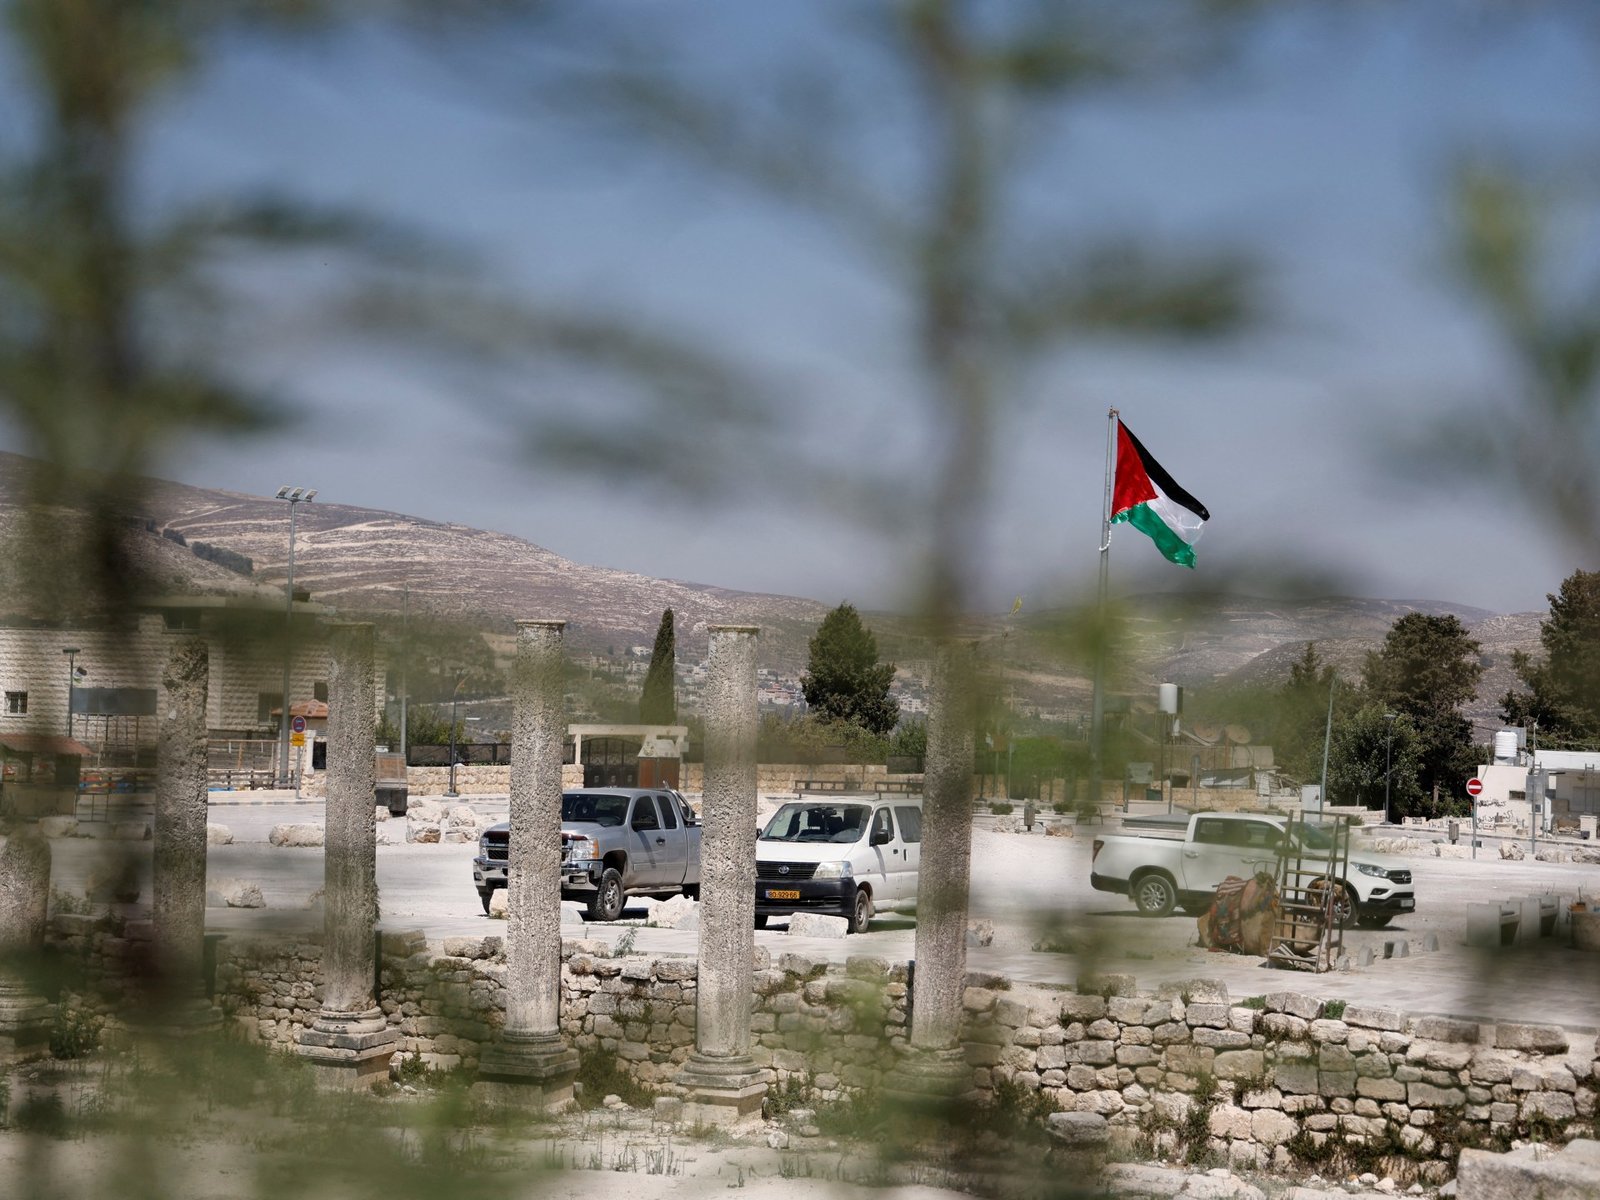 In Sebastia, Palestinians fear ‘Judaisation’ amid rising Israeli violence | Israel-Palestine conflict